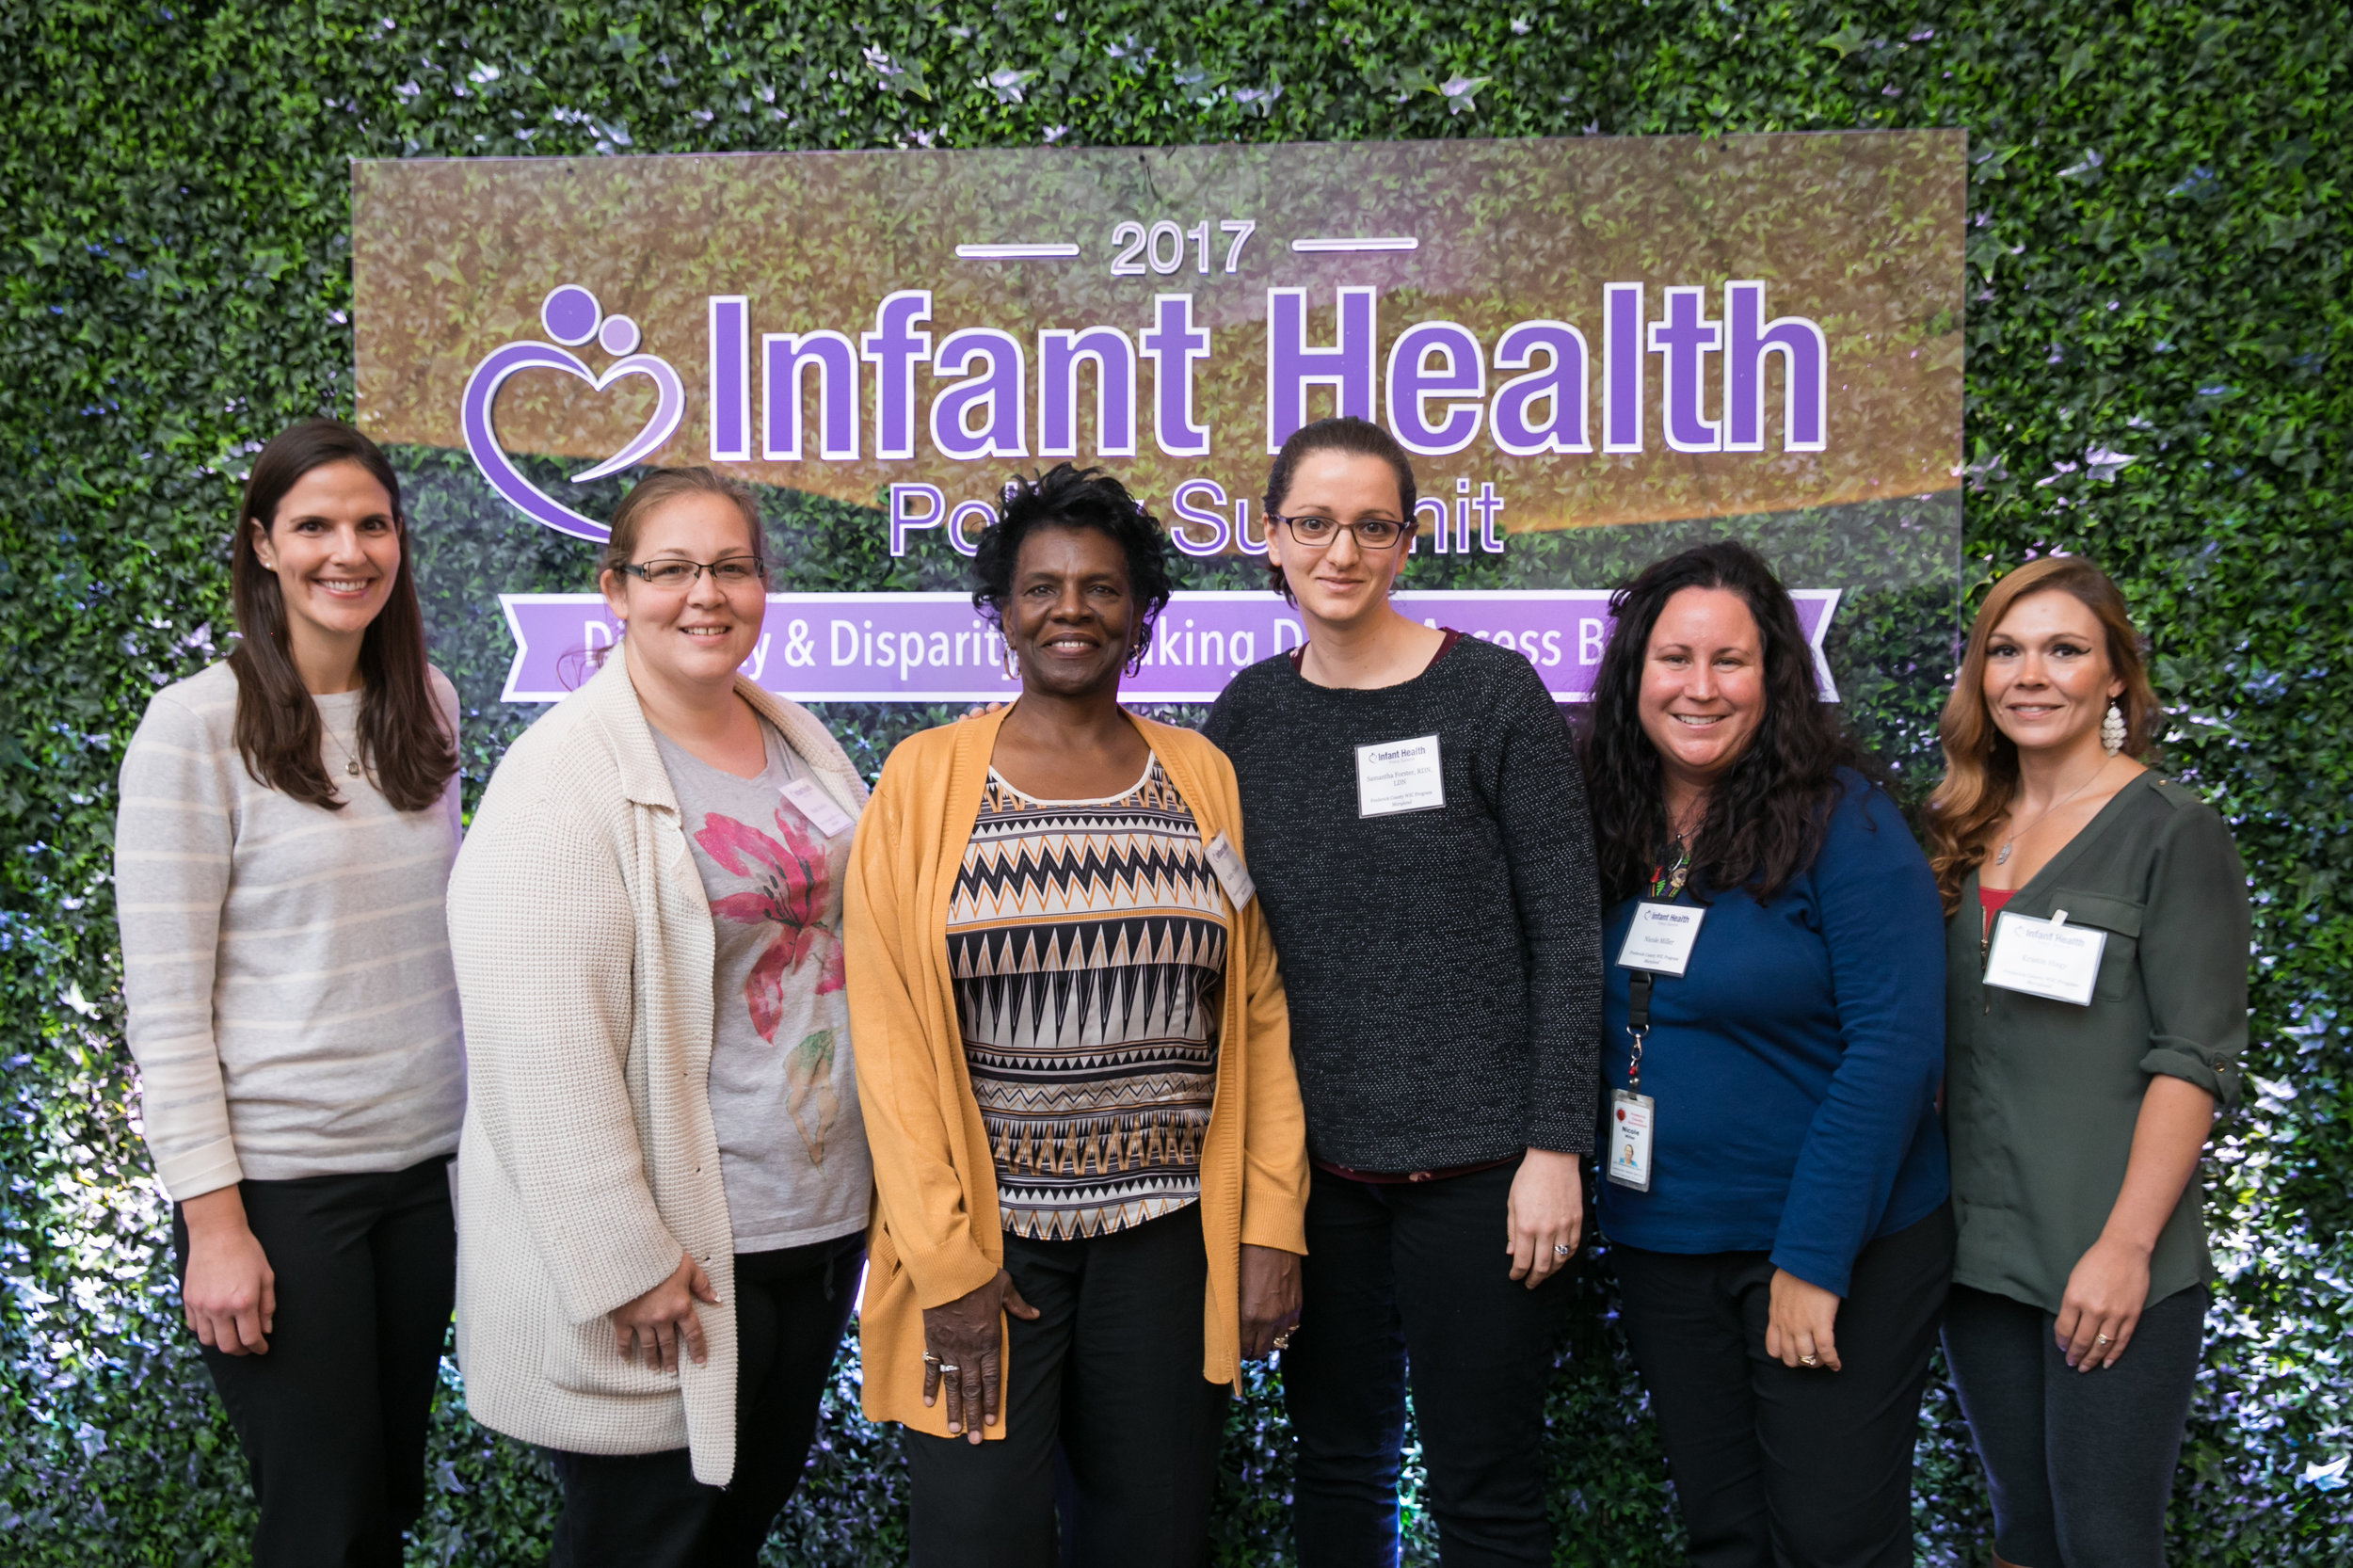 Infant Health Policy Summit - Jason Dixson Photography - 101722 - 0337.jpg